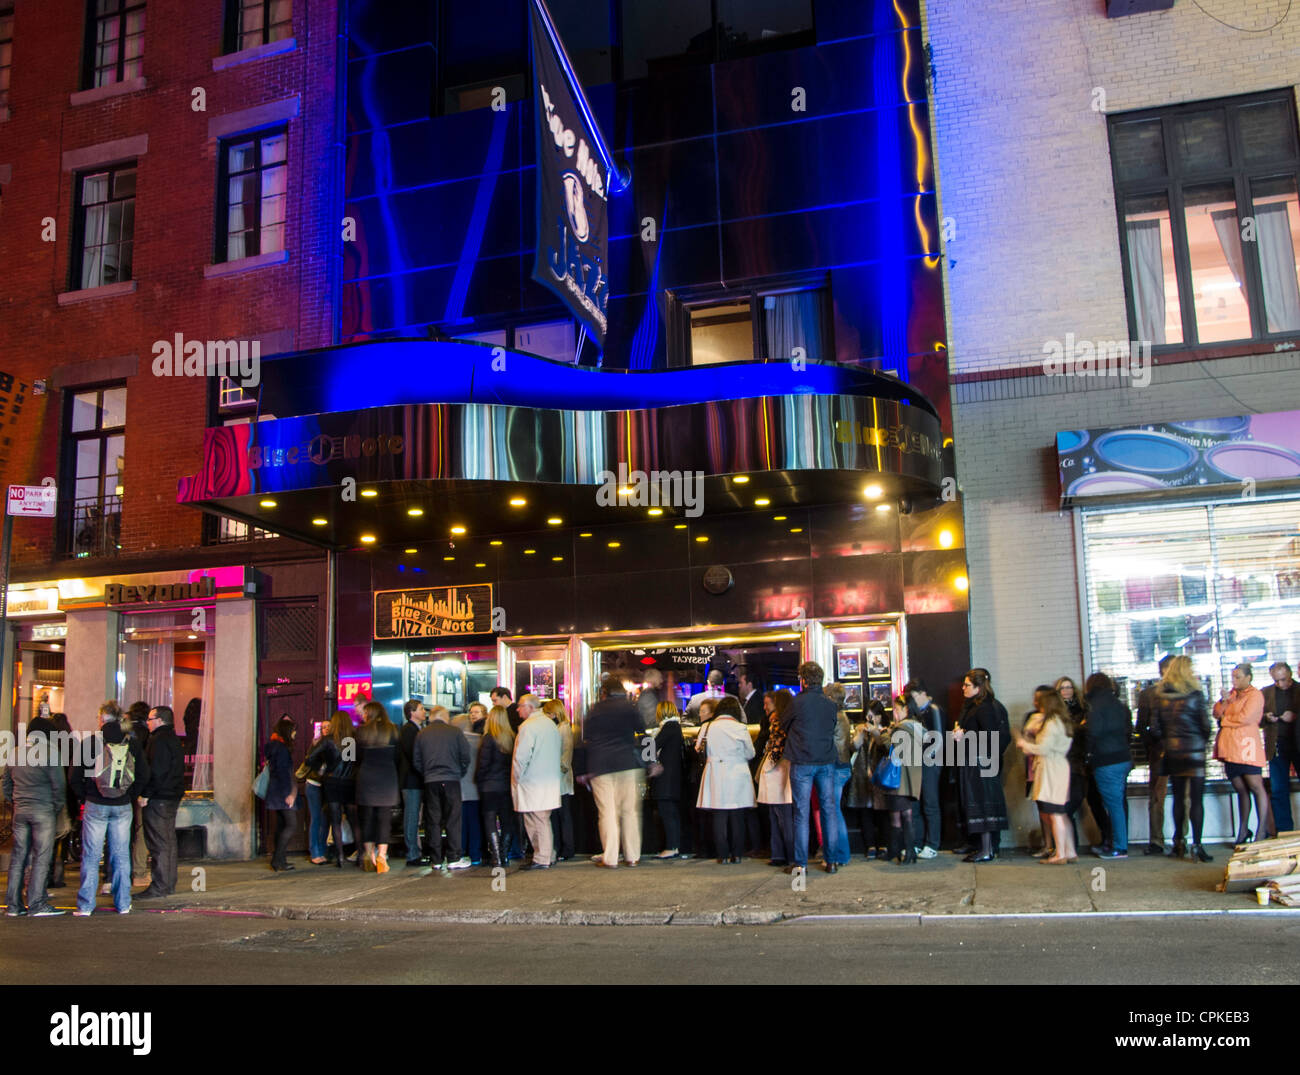 photographic image of an iconic New York City jazz club Blue Note Jazz Club